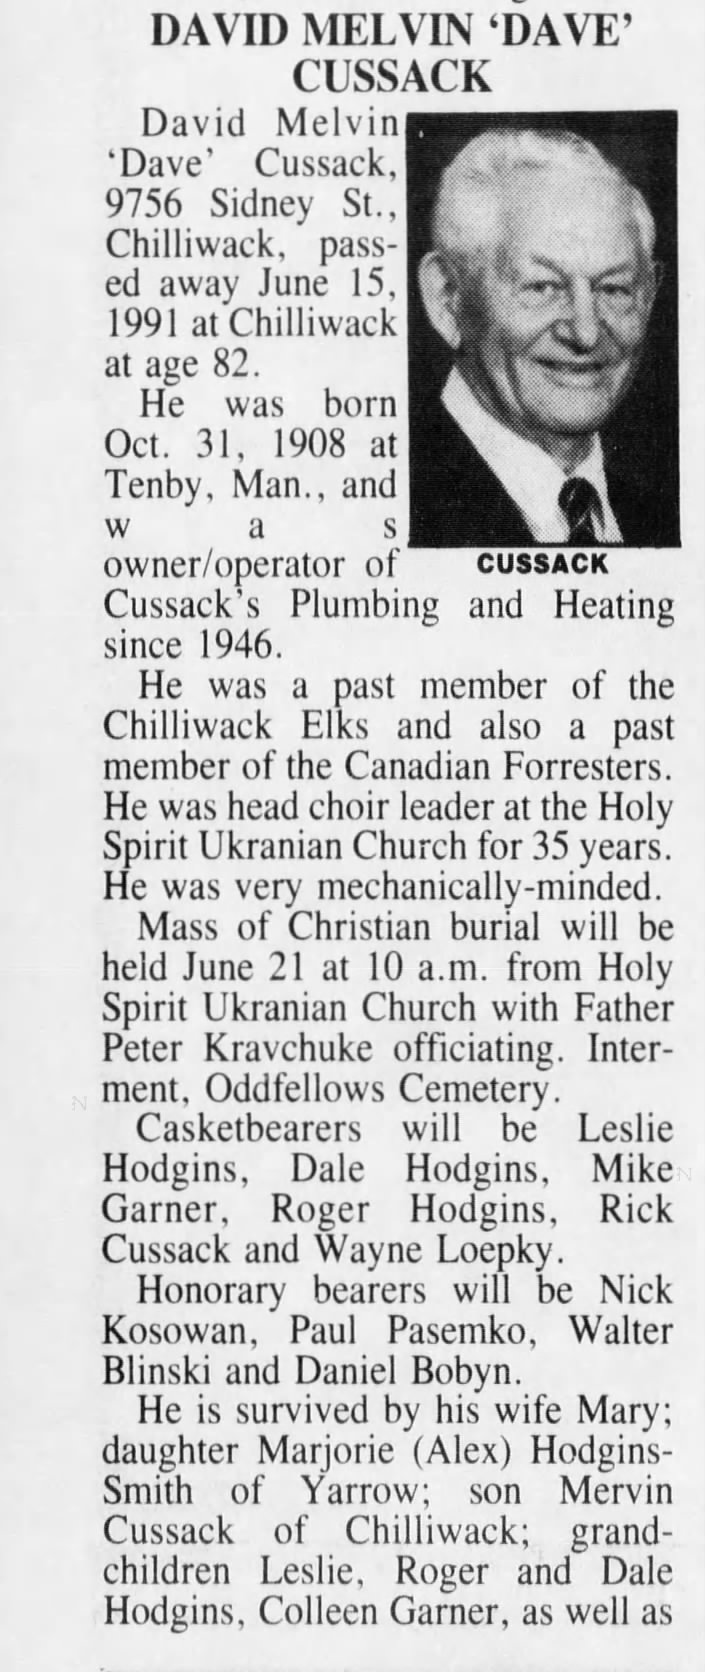 The Chilliwack Progress, BC 19 Jun 1991, Wed., pg 8 part 1